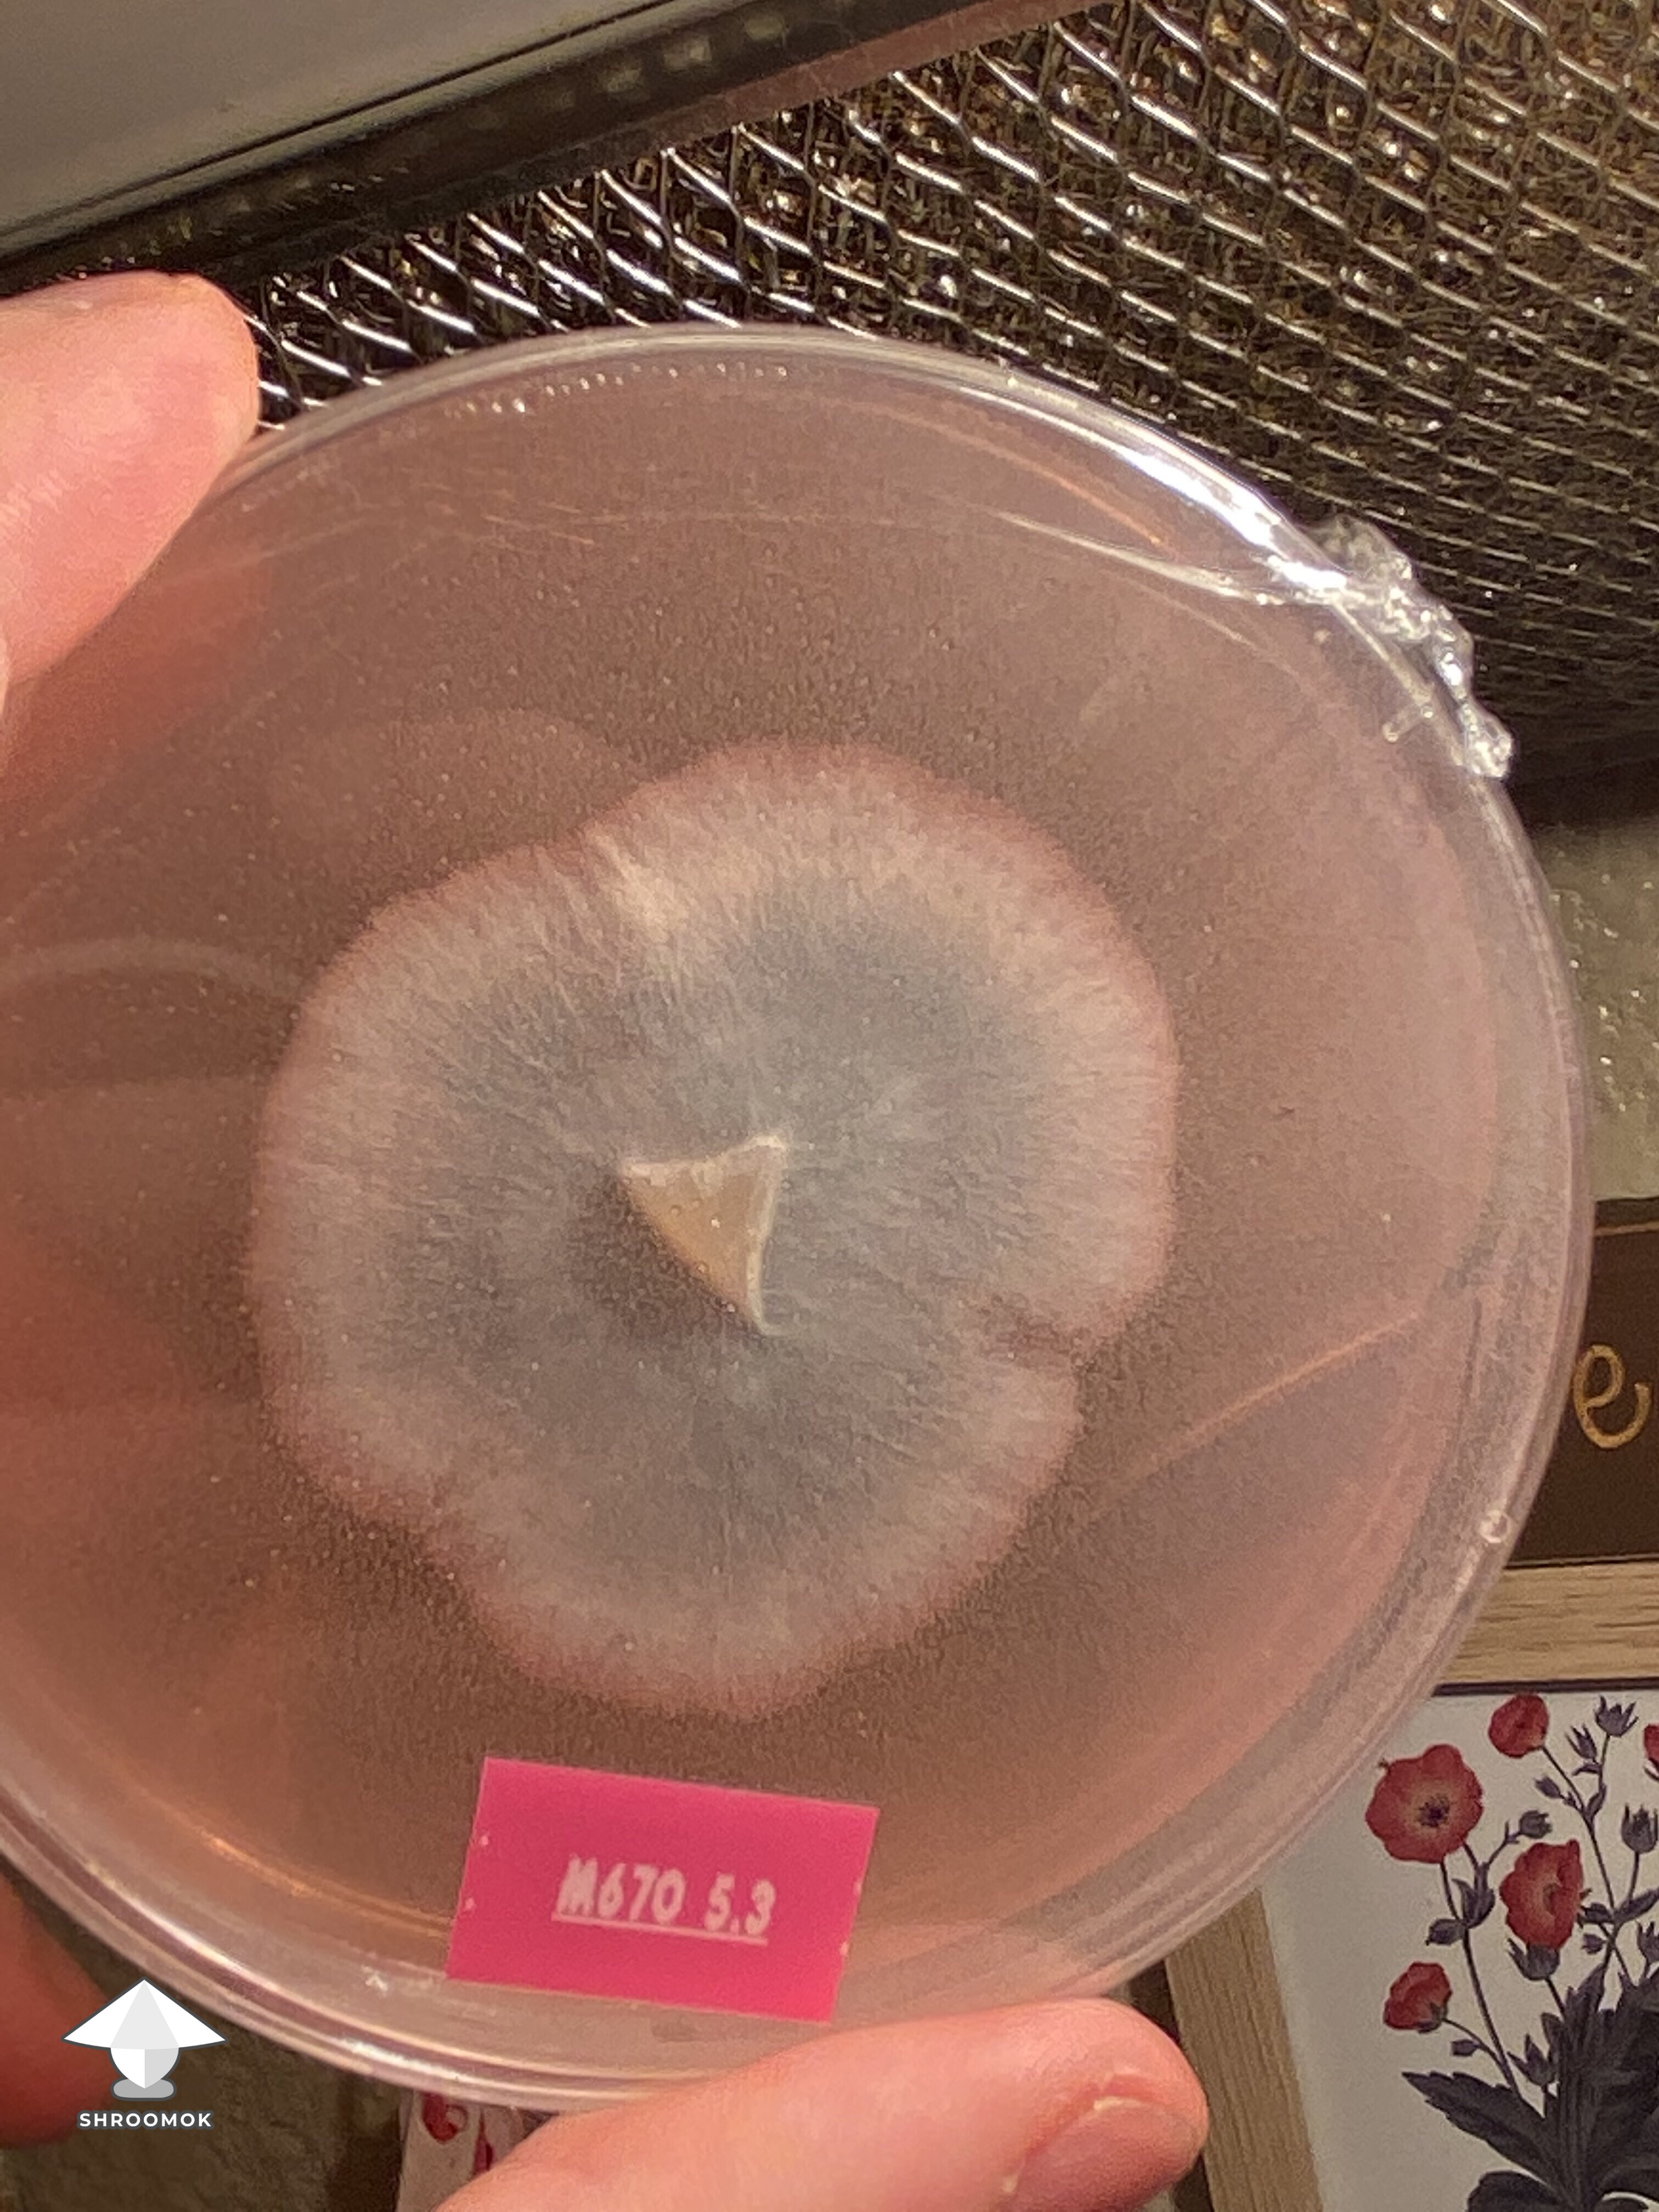 Looks like the mycelium on the agar is turning blue - mold or just bruising?